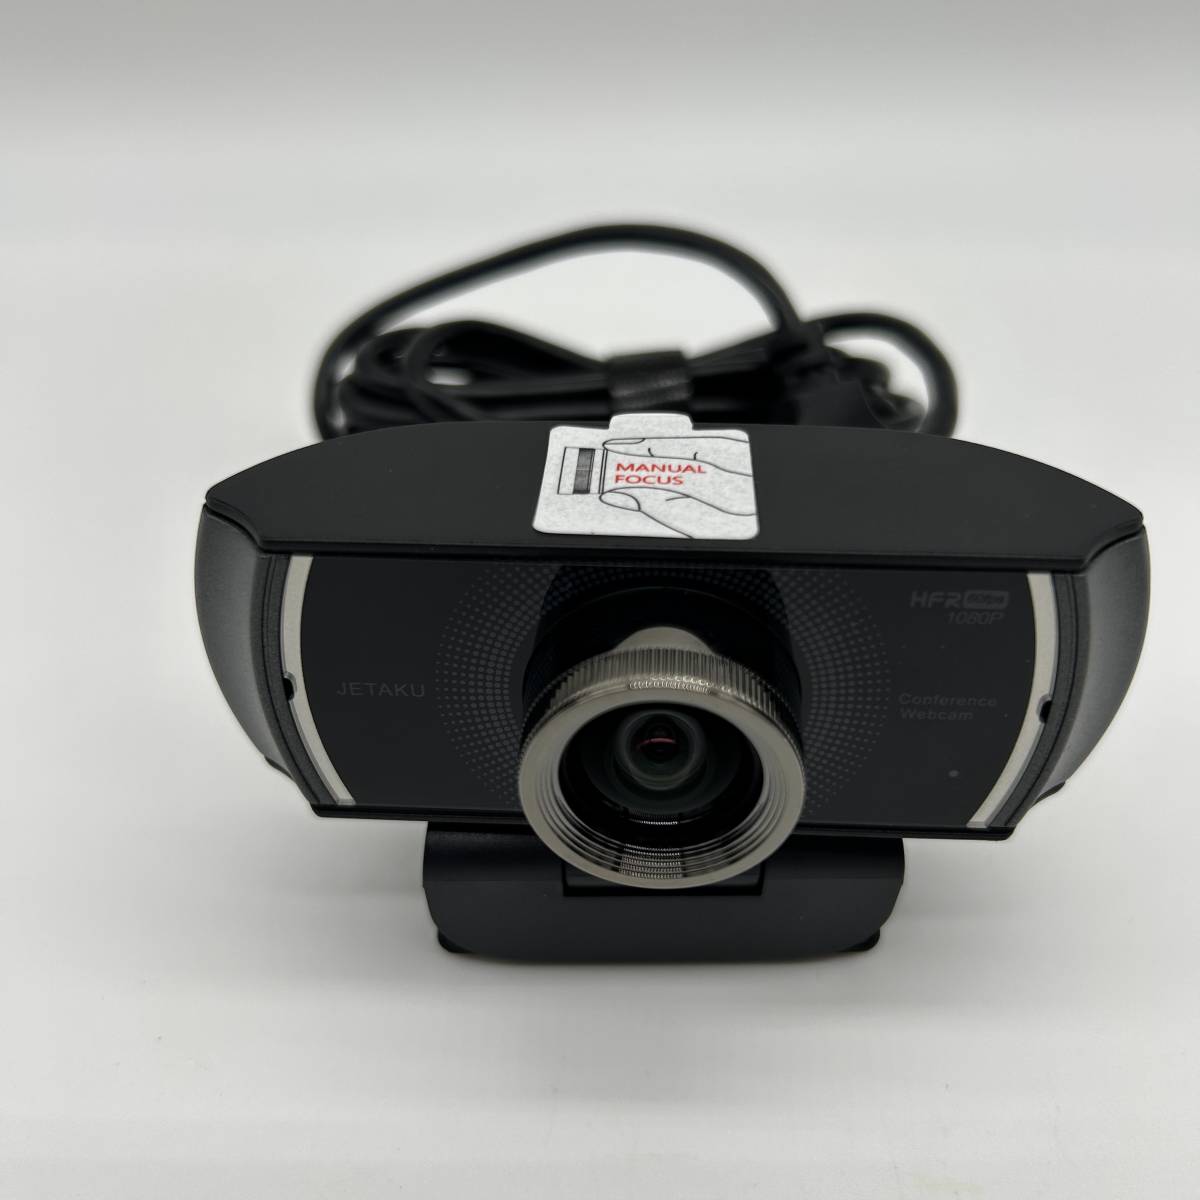 JETAku ウェブカメラ 60fps 在宅勤務 Webカメラ B304_画像1